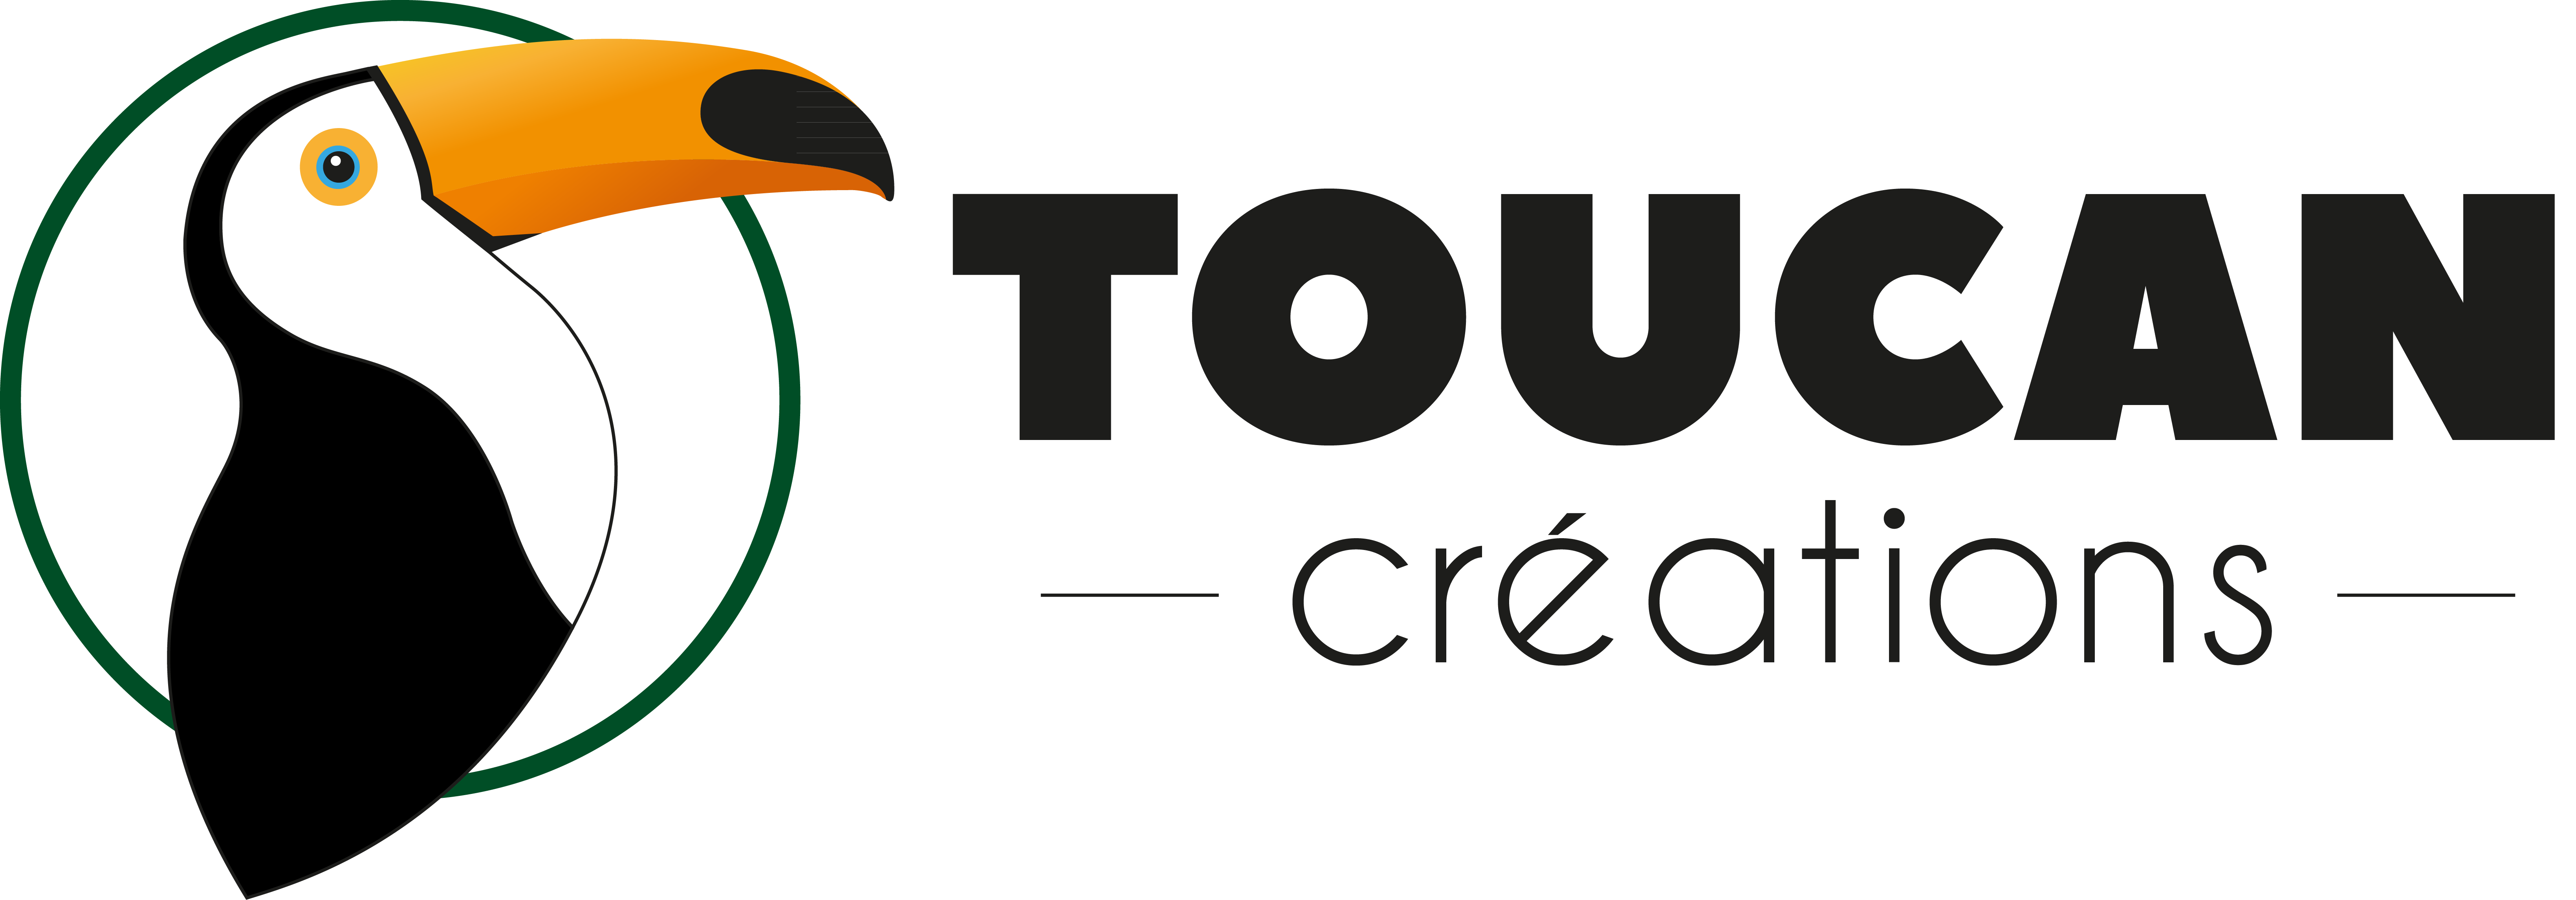 logo long toucan creations